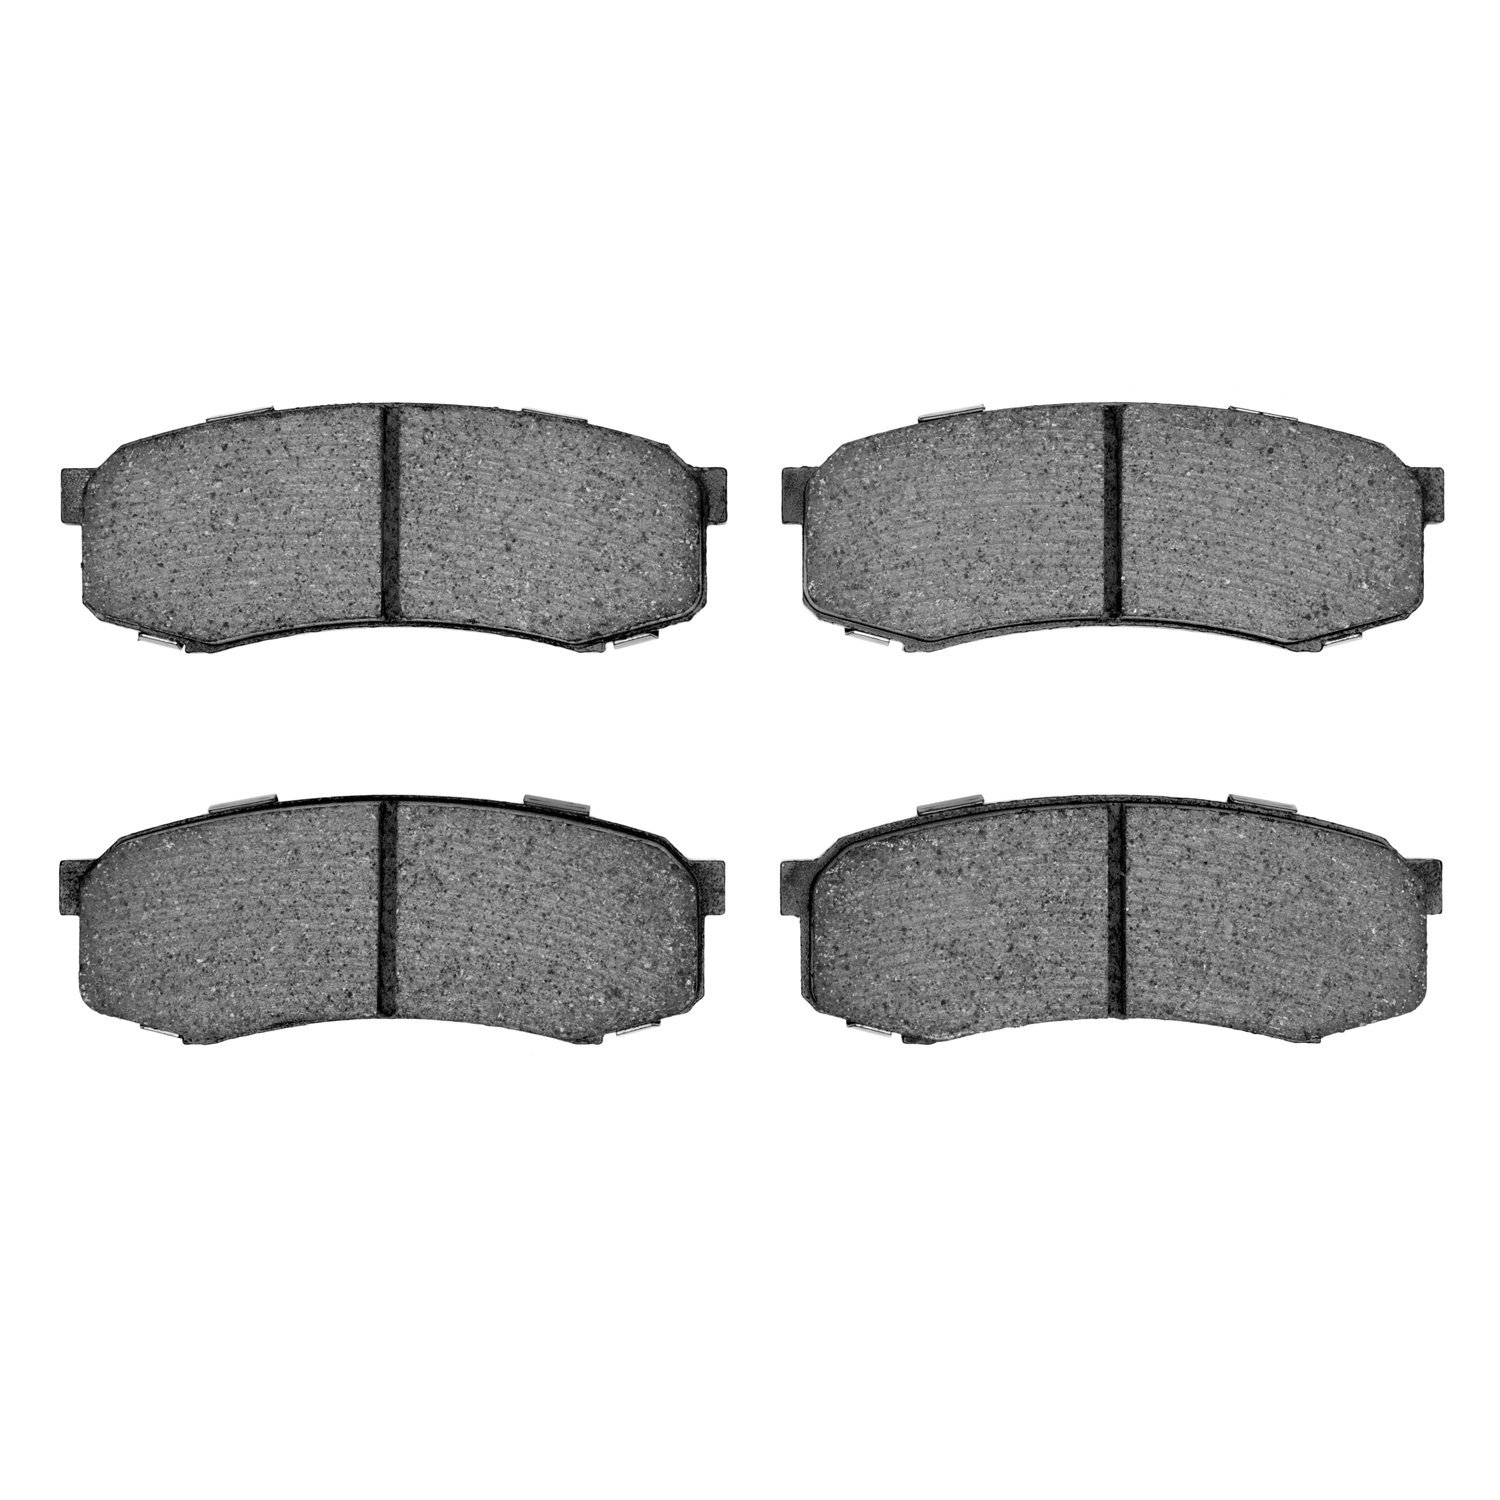 Optimum OE Brake Pads, Fits Select Fits Multiple Makes/Models, Position: Rear